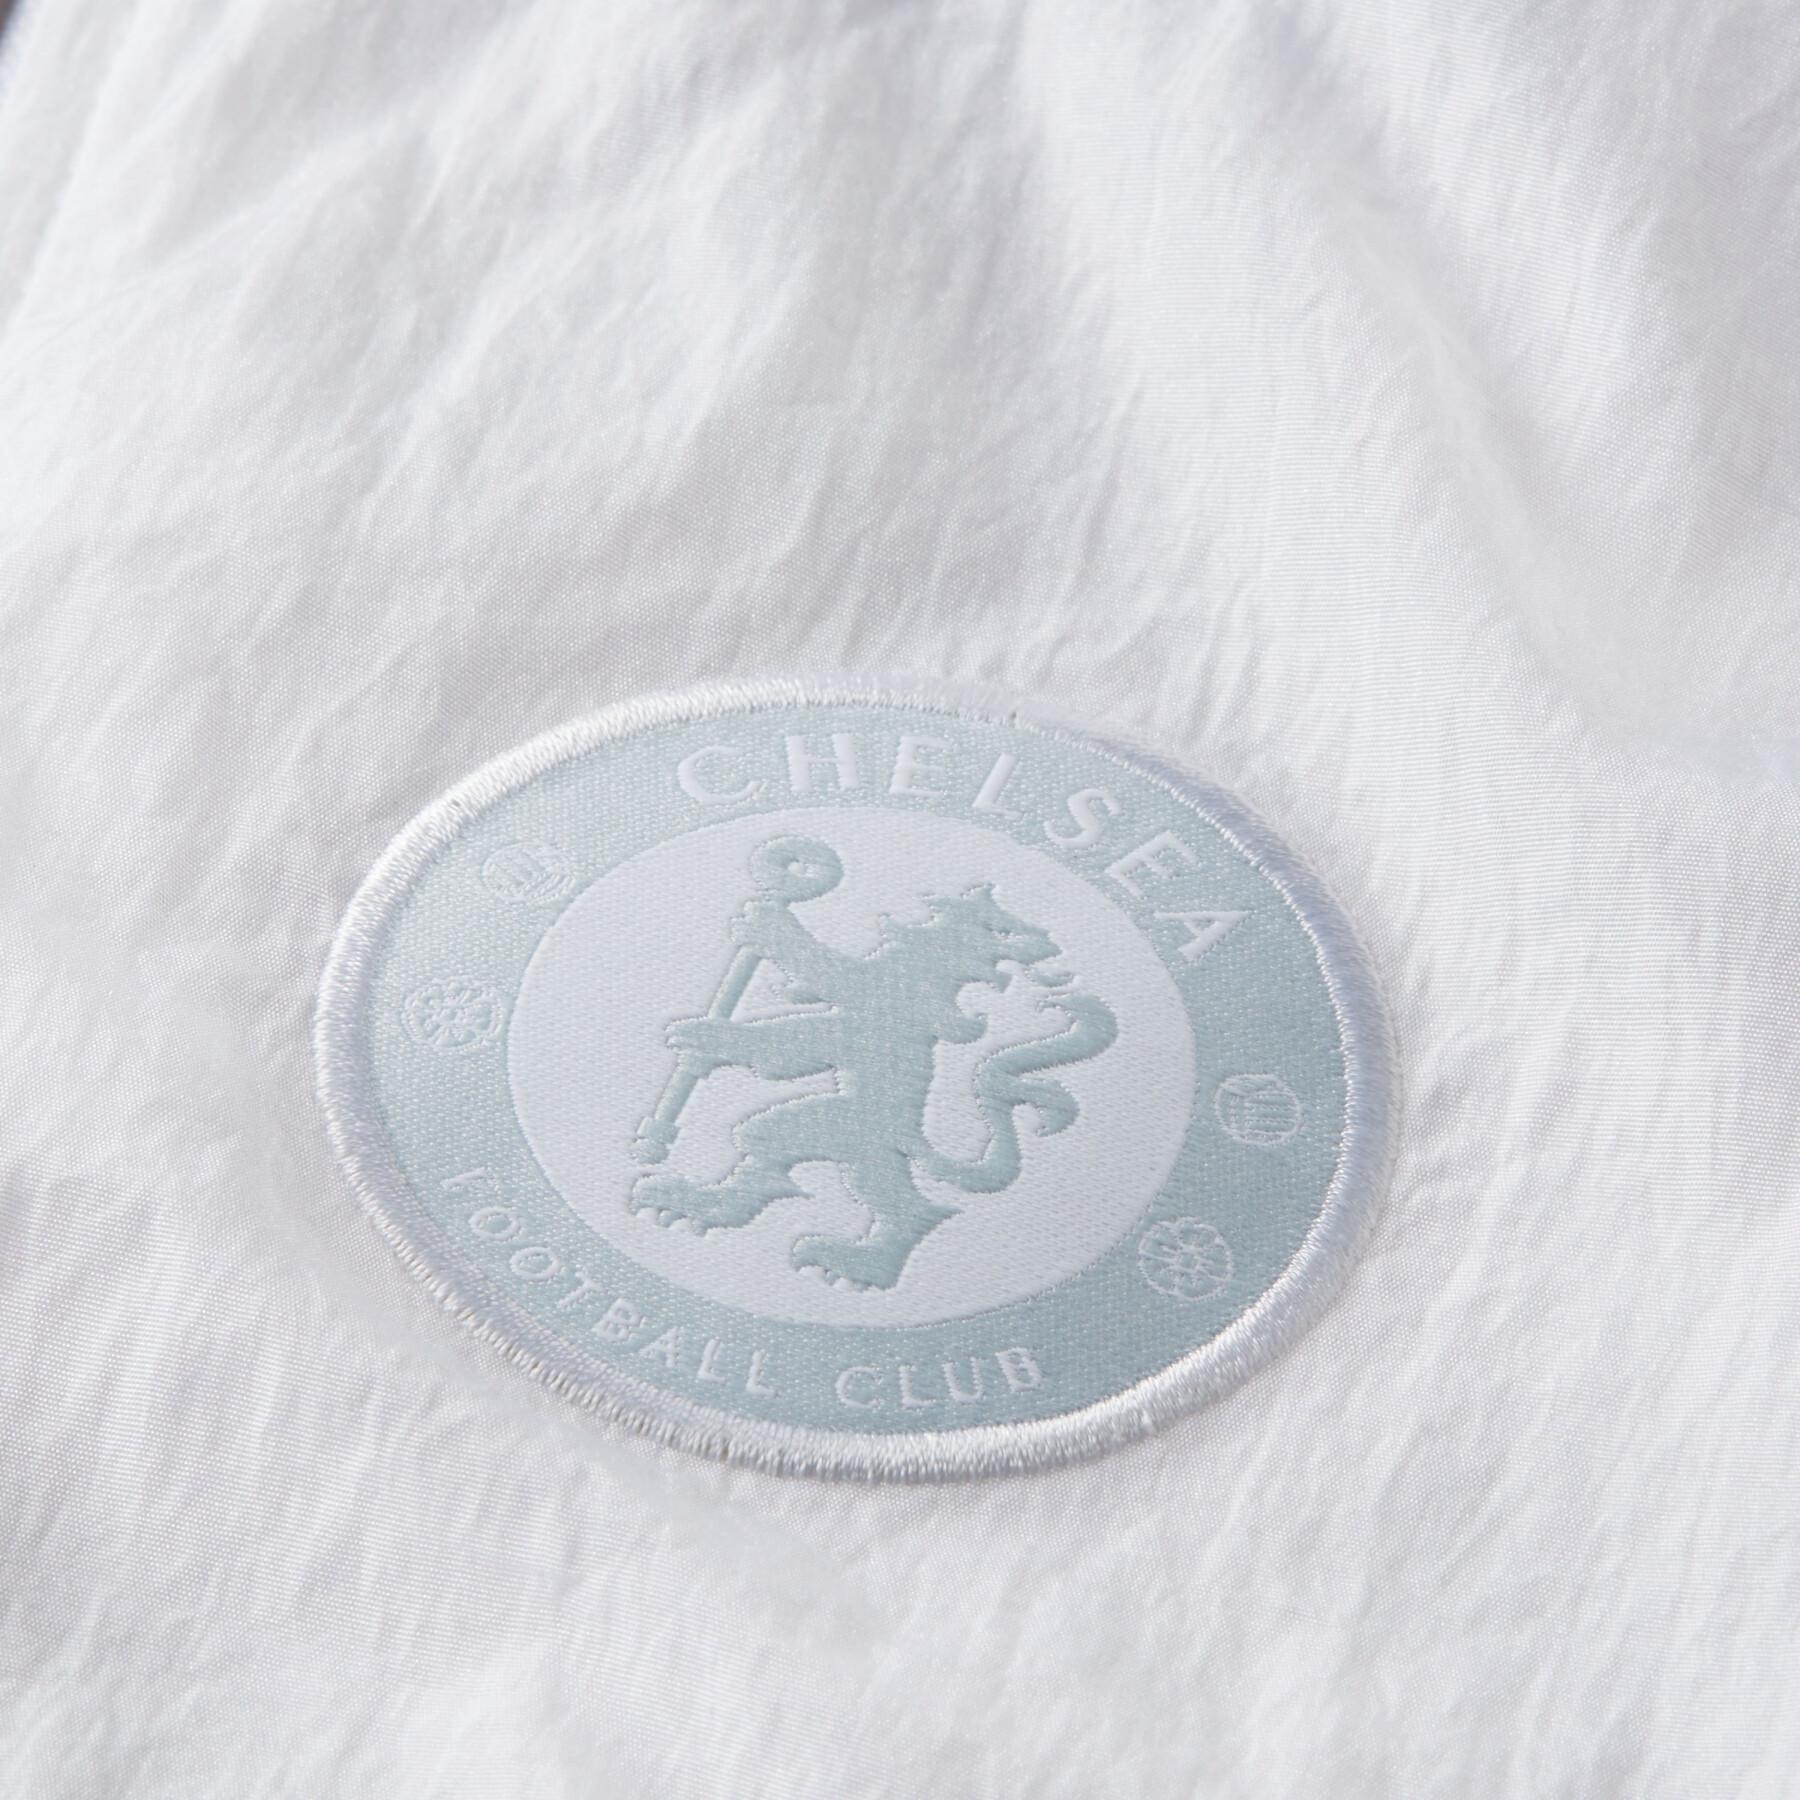 Nylonowa bluza dresowa Chelsea 2020/21